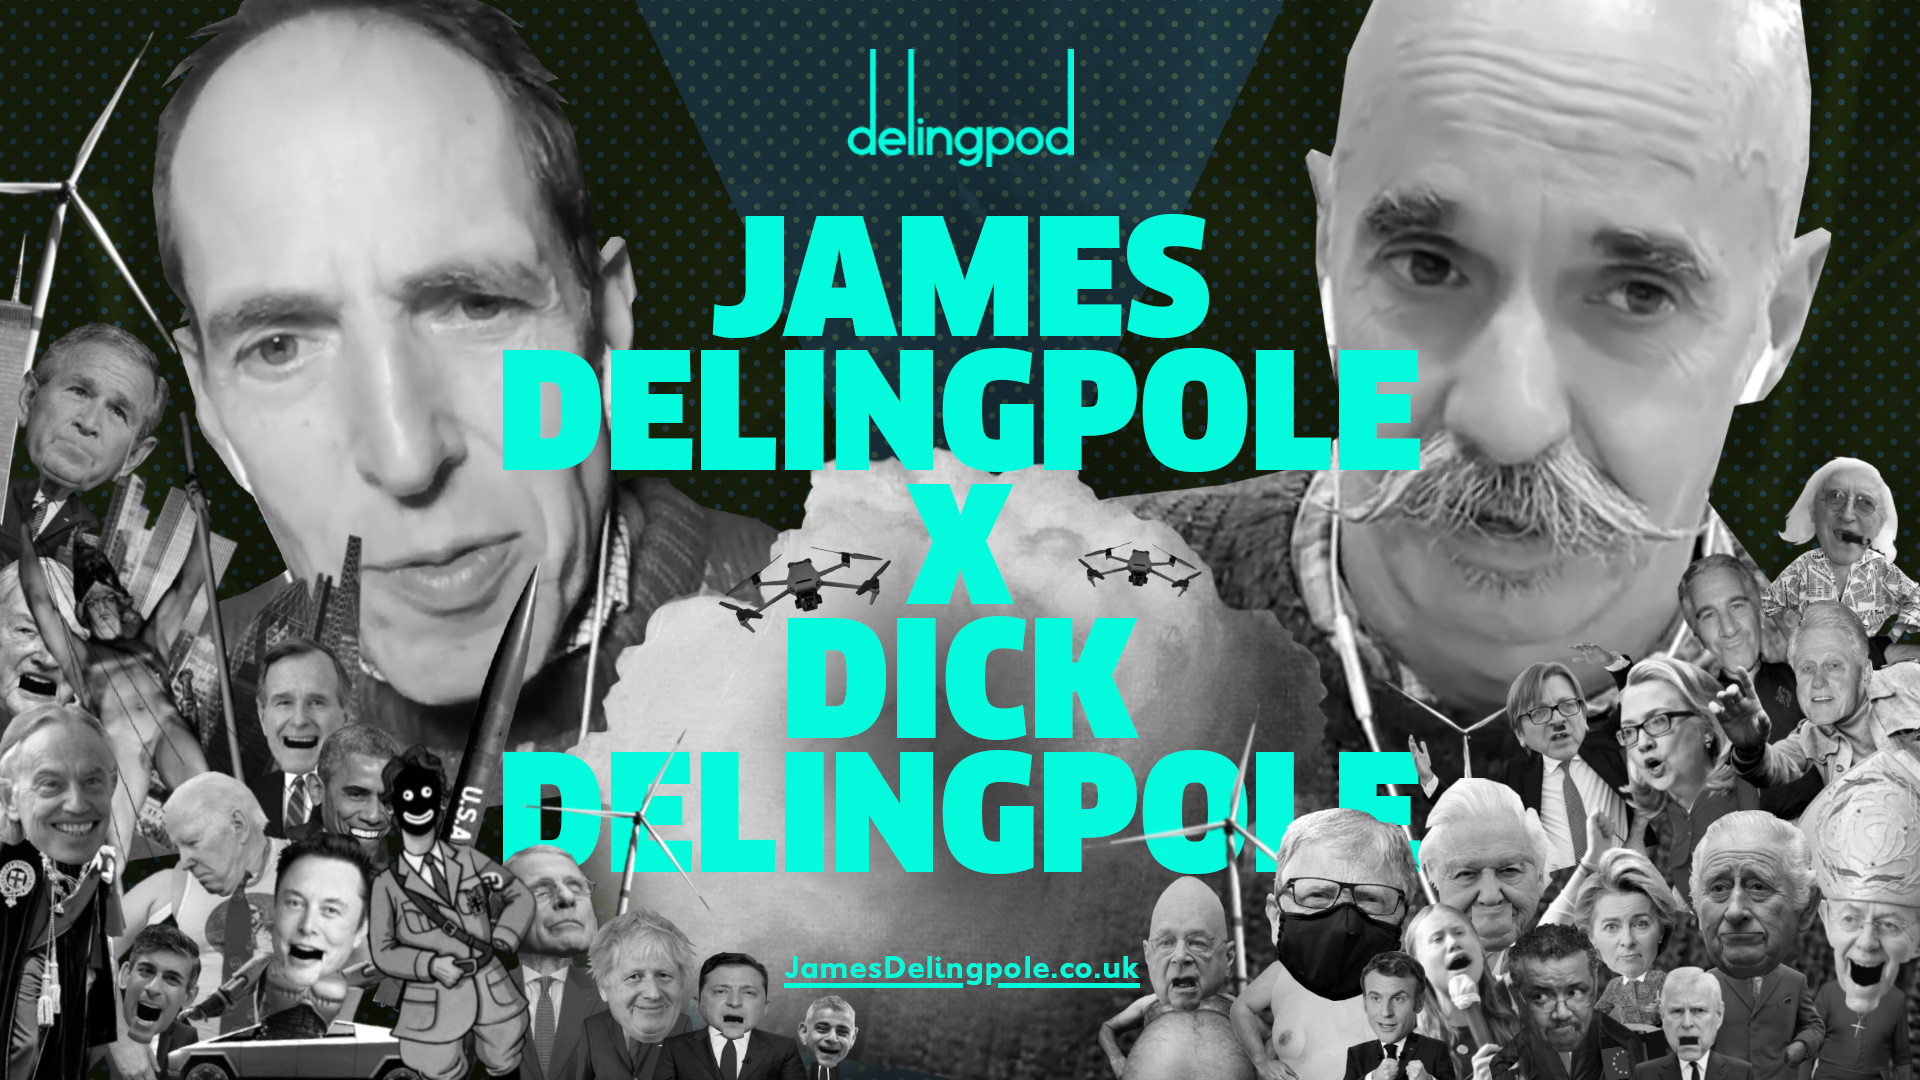 Dick Delingpole